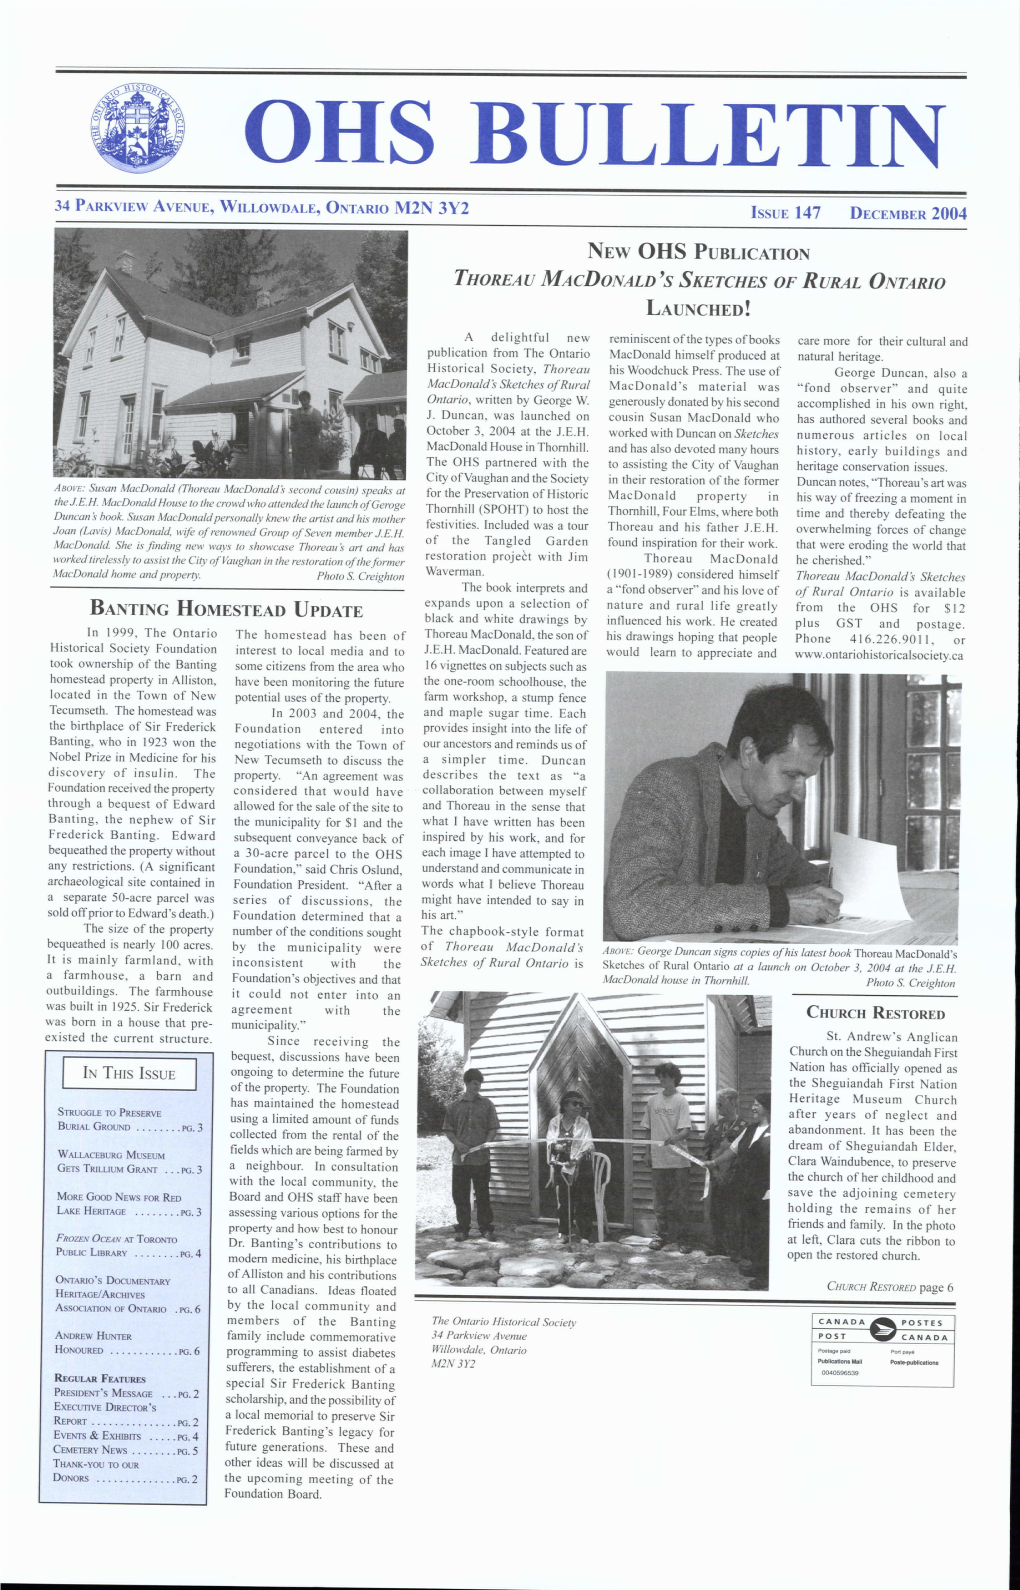 December 2004 OHS Bulletin, Issue